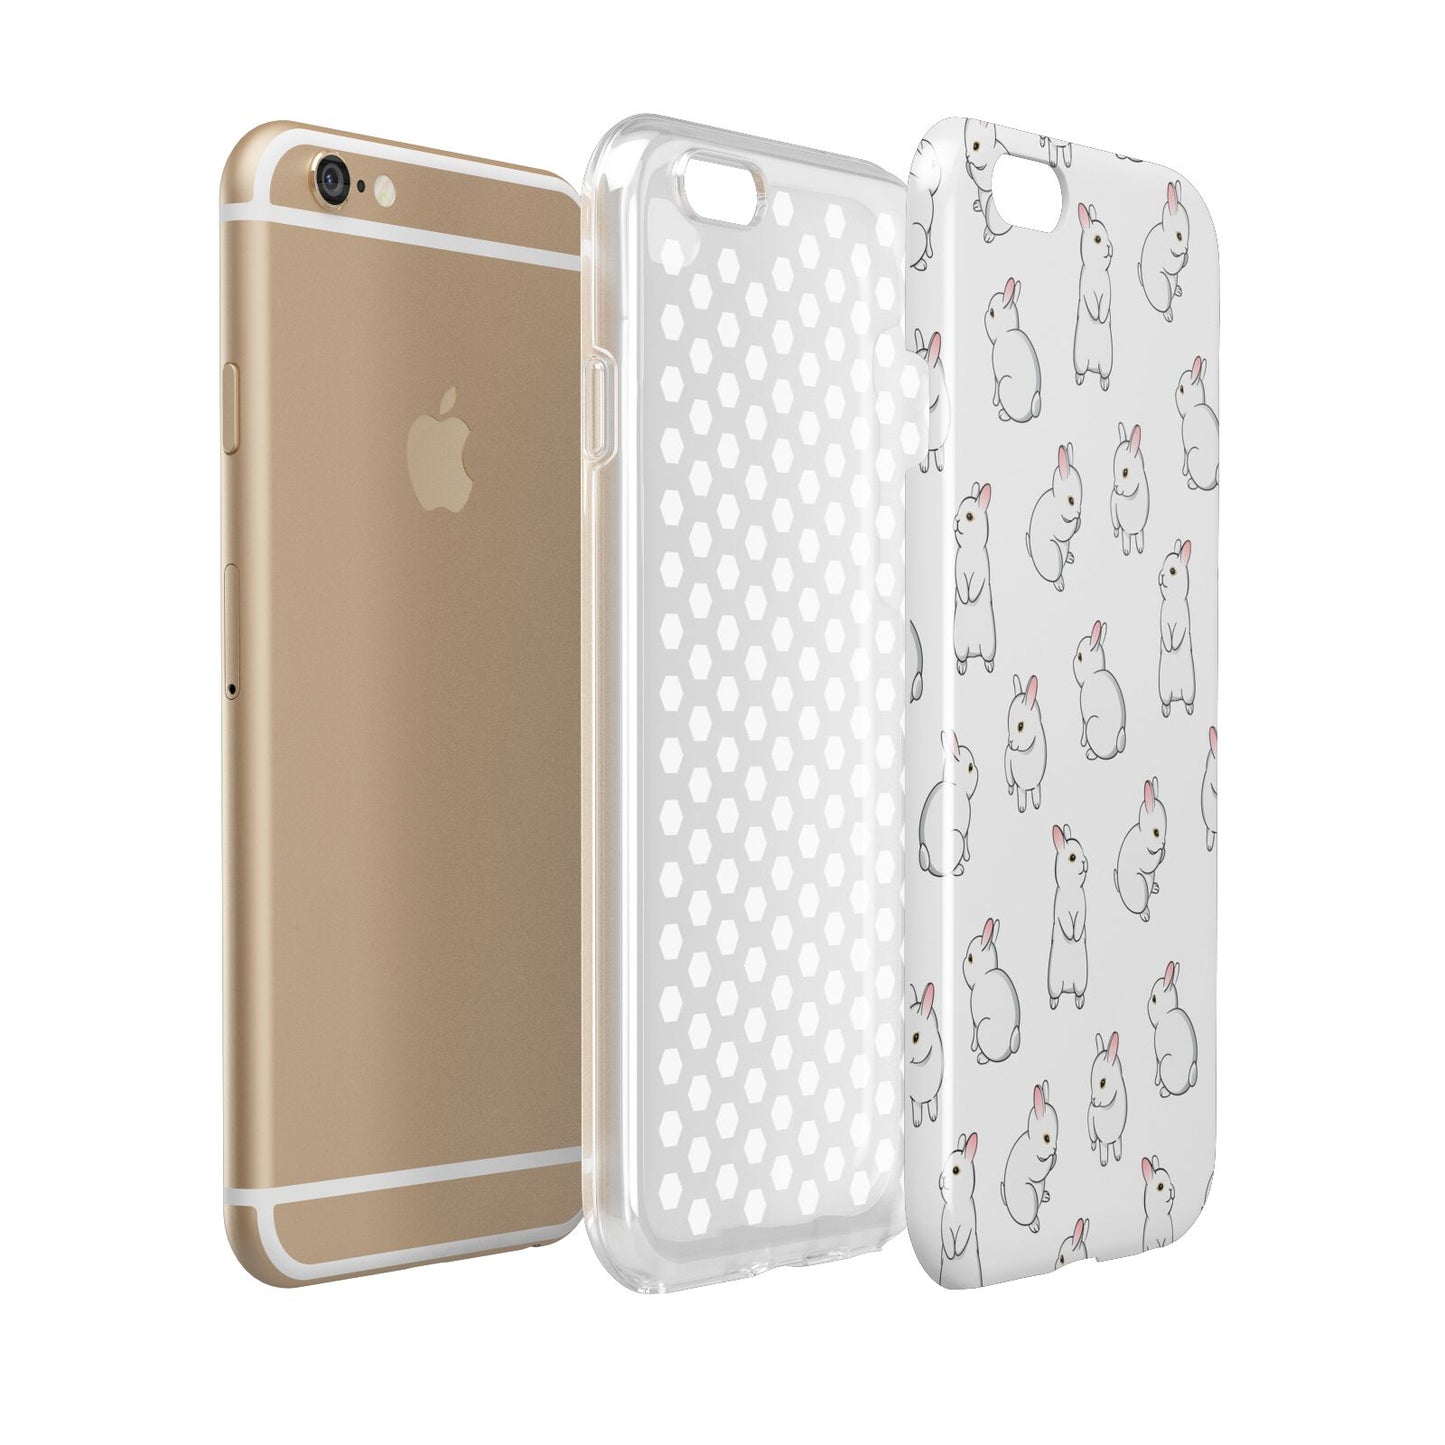 Bunny Rabbit Apple iPhone 6 3D Tough Case Expanded view